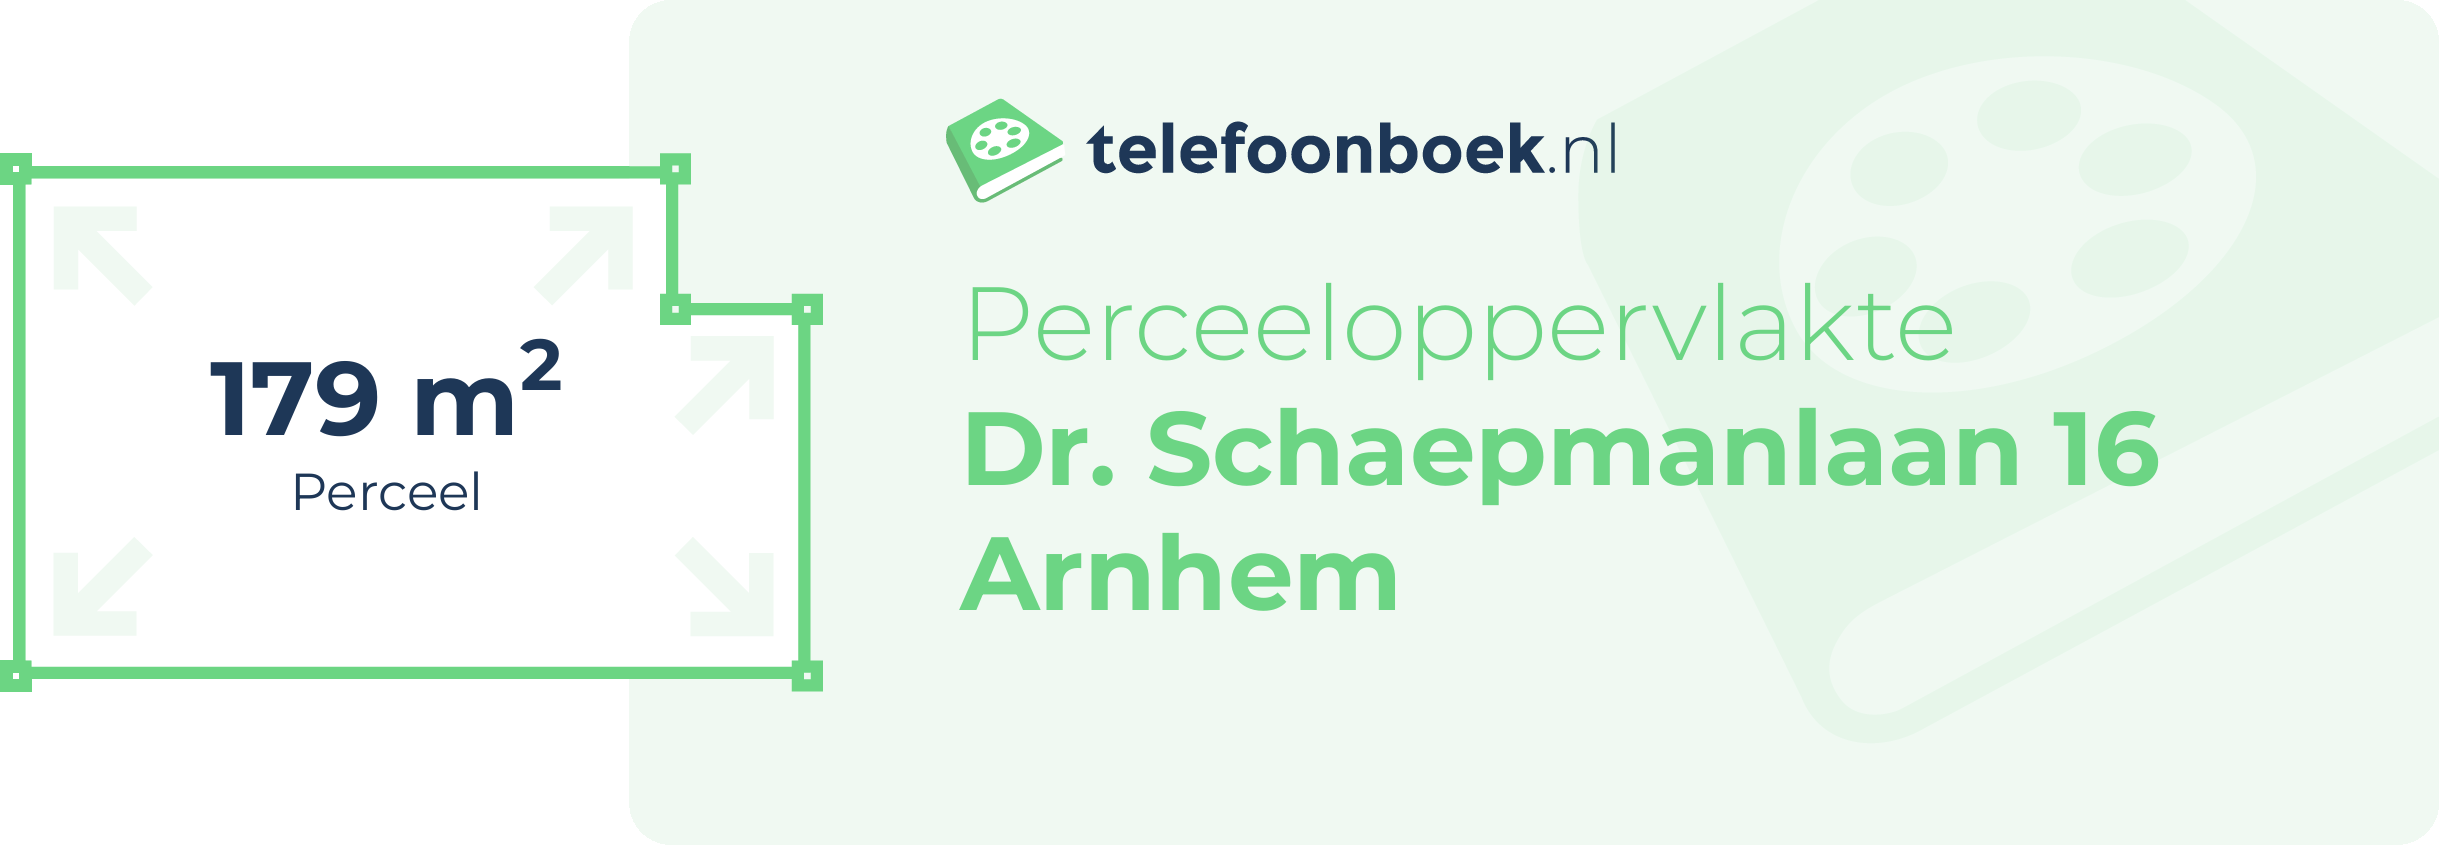 Perceeloppervlakte Dr. Schaepmanlaan 16 Arnhem